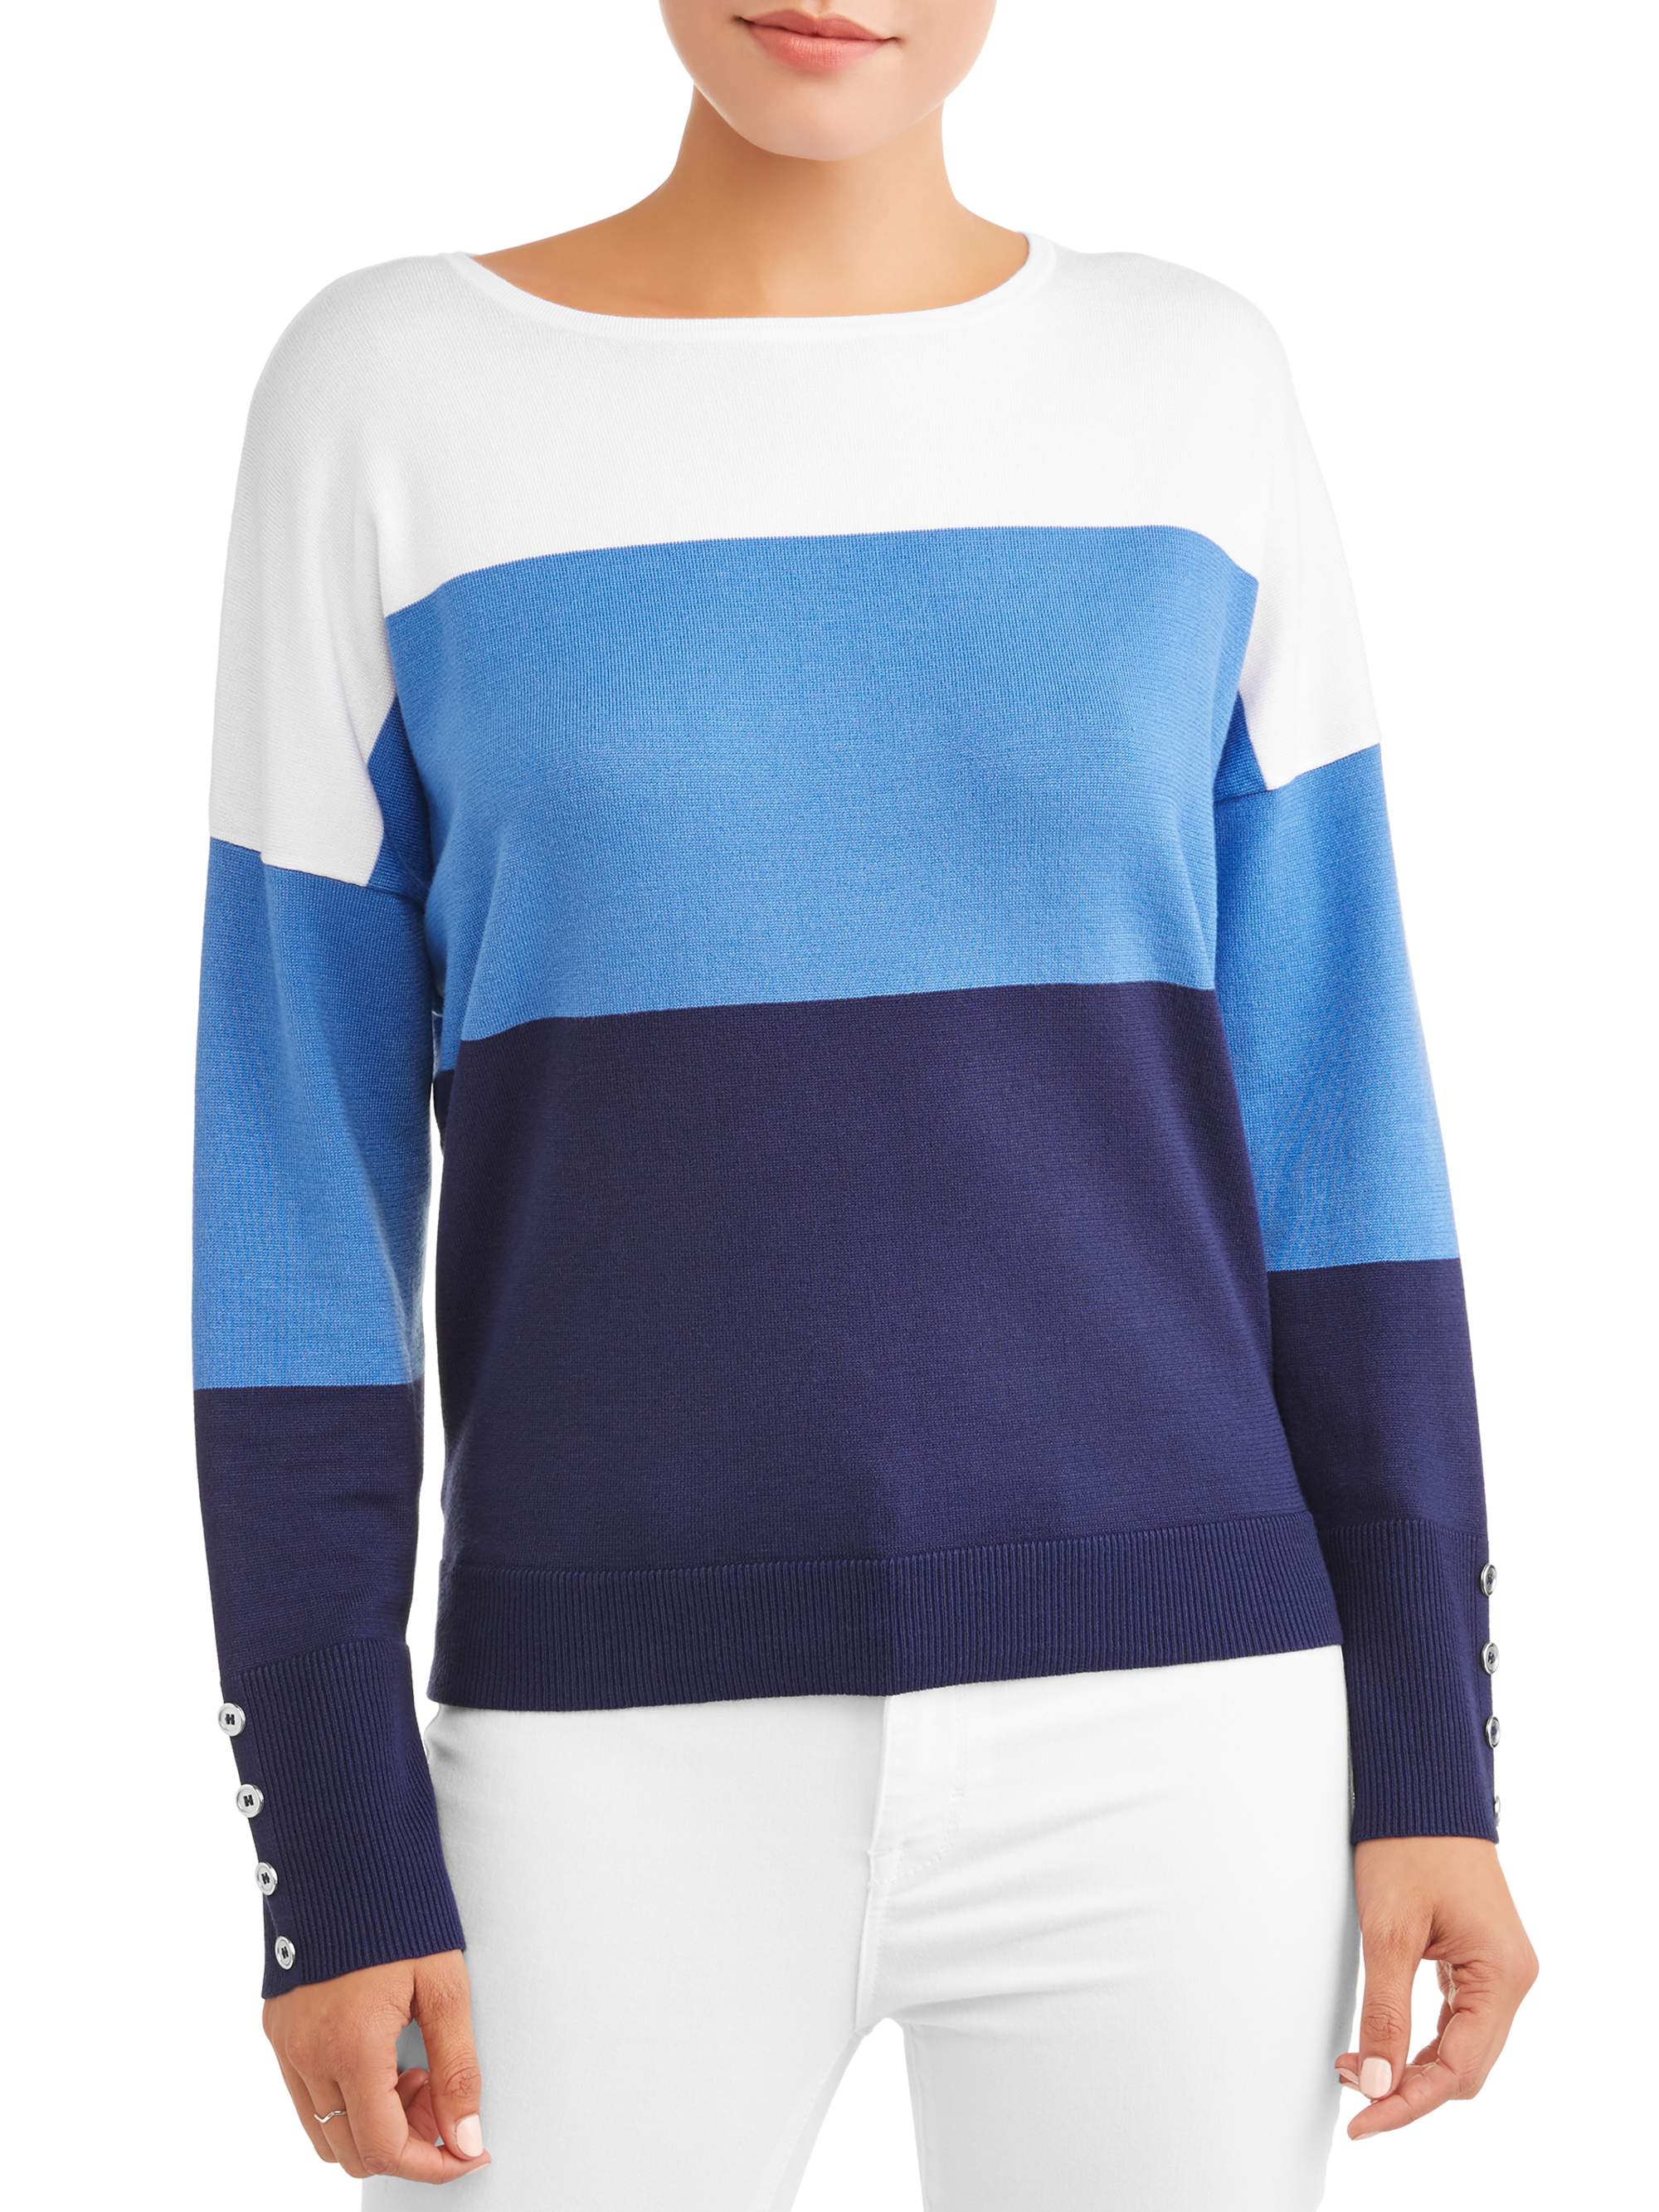 Women's Colorblock Dolman Sleeve Sweater - image 1 of 4